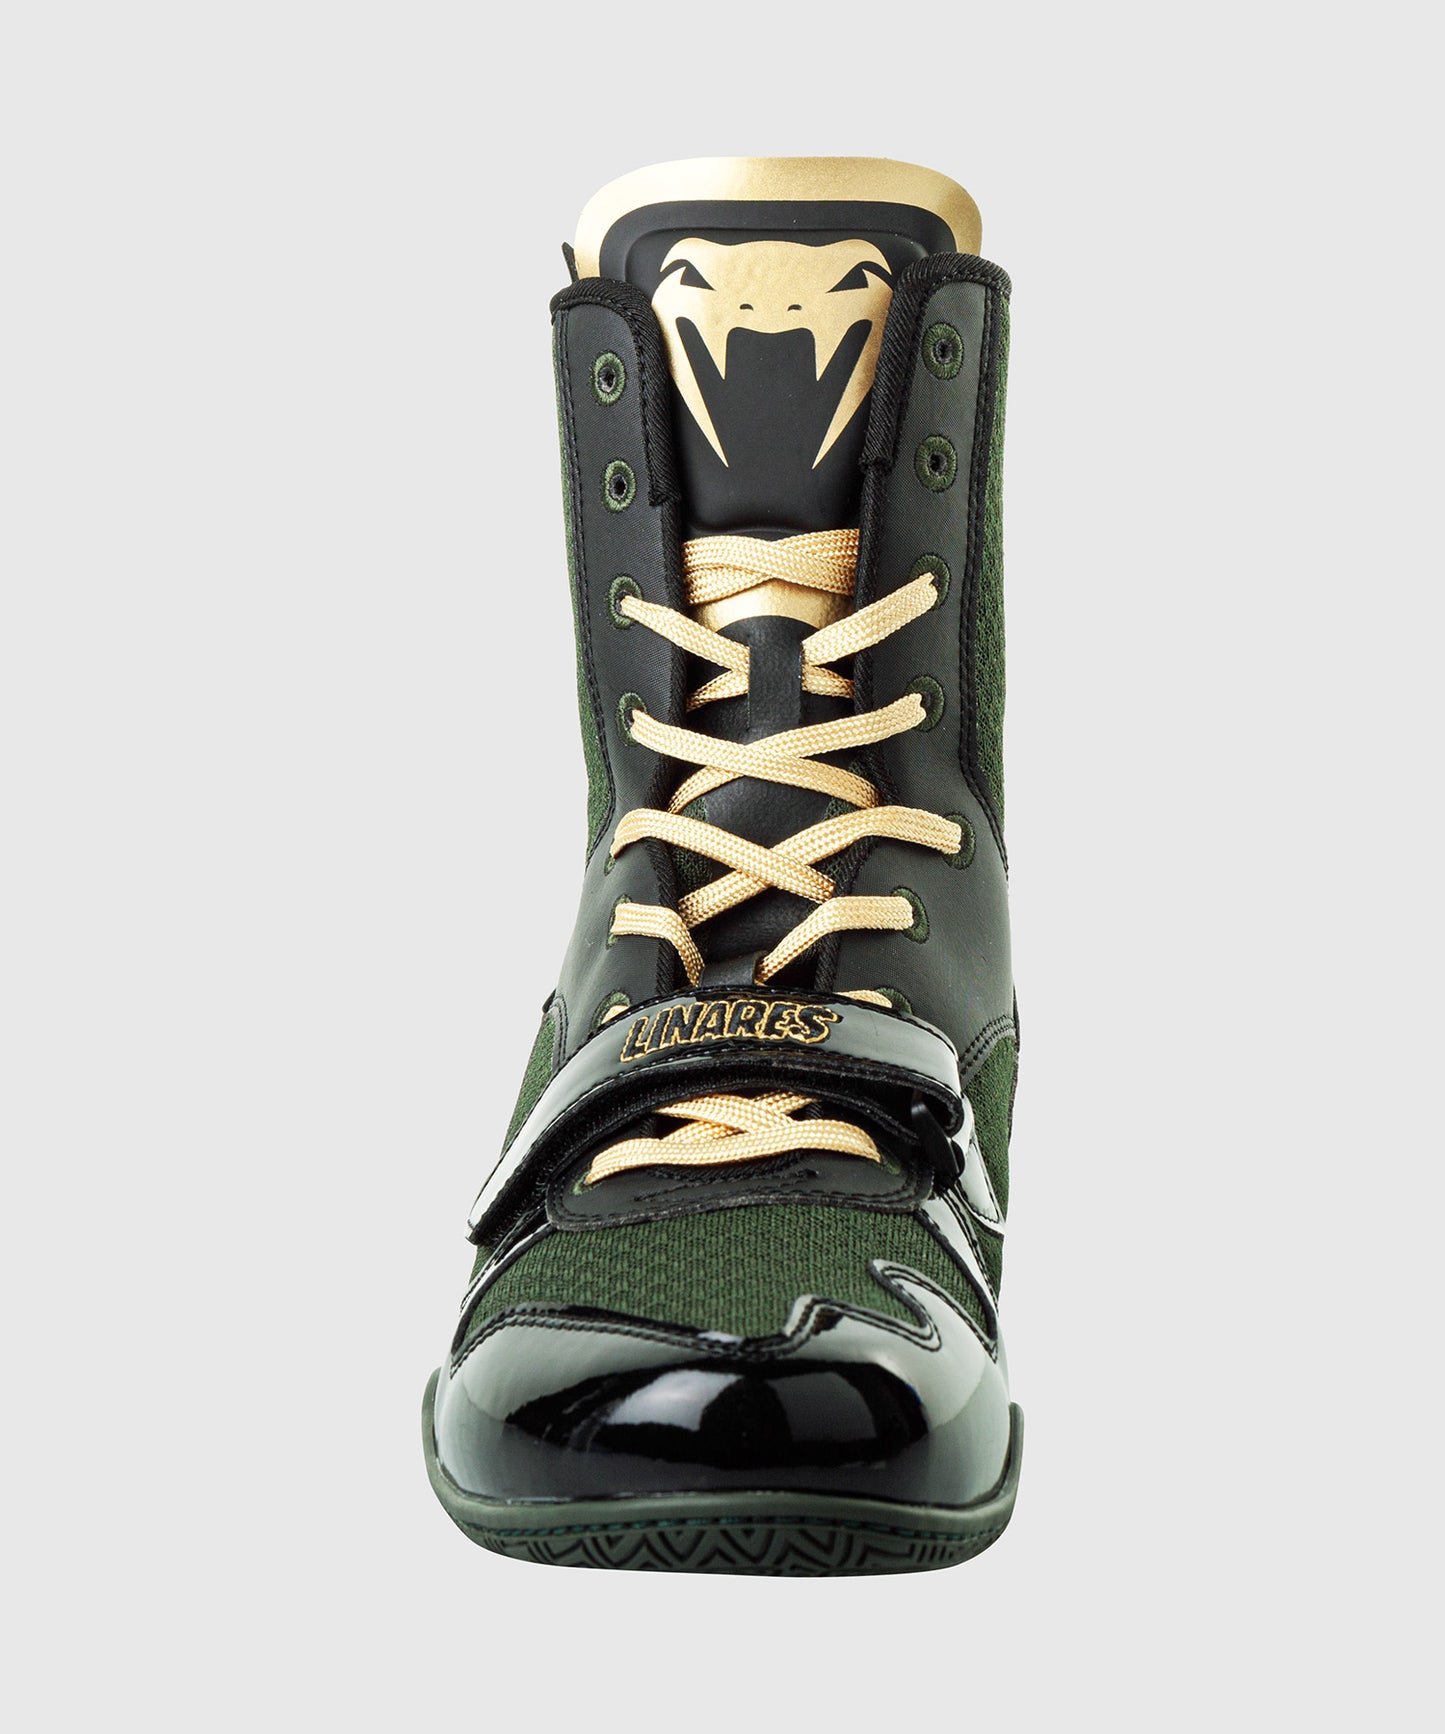 Chaussures de boxe Venum Elite Evo Linares Edition